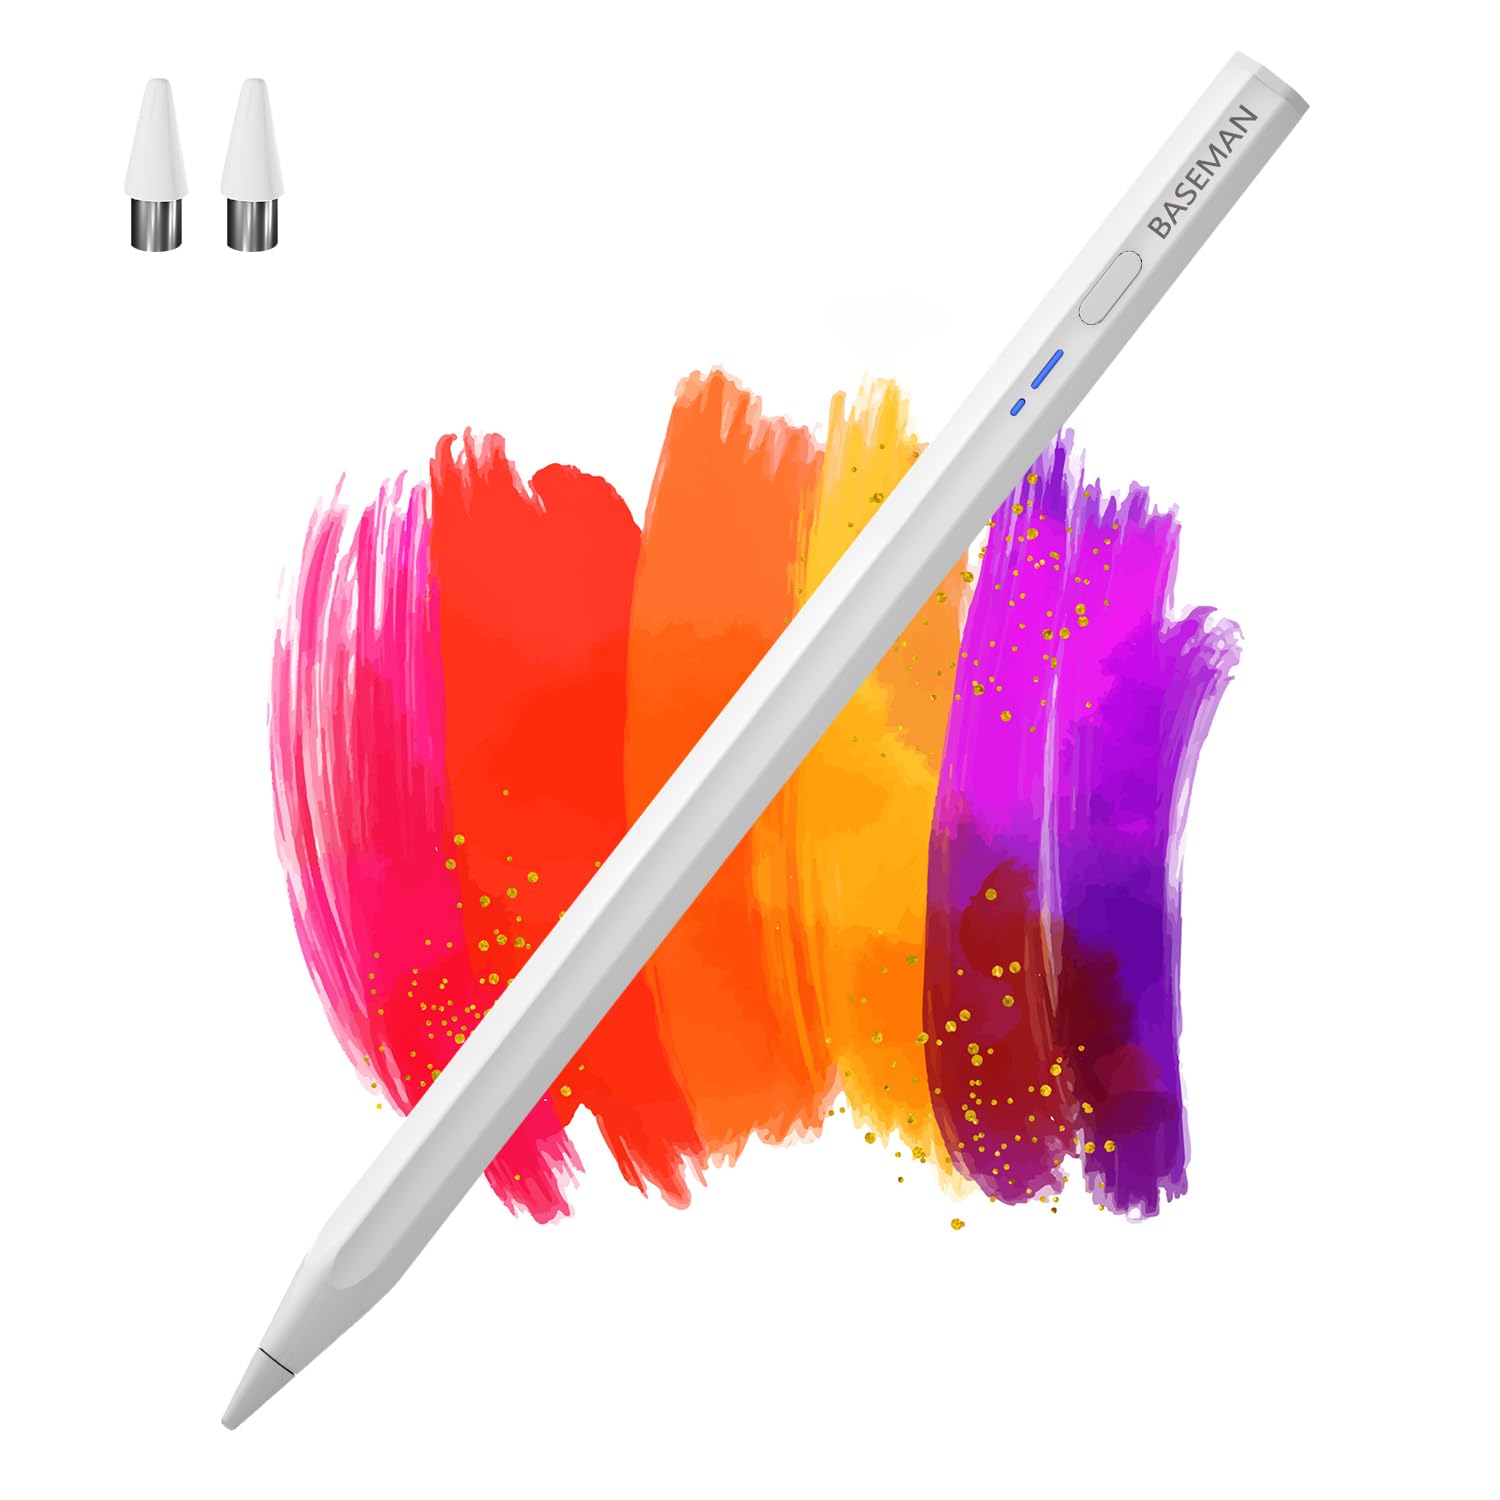 BASEMAN Stylus Pen for iPad with Palm Rejection, Tilt Sensitive Pencil for Apple iPad Pen Compatible with iPad 10/9/8/7/6th Gen, iPad Air 5/4/3rd Gen, iPad Pro 11&12.9 inch, iPad Mini 6/5th Gen